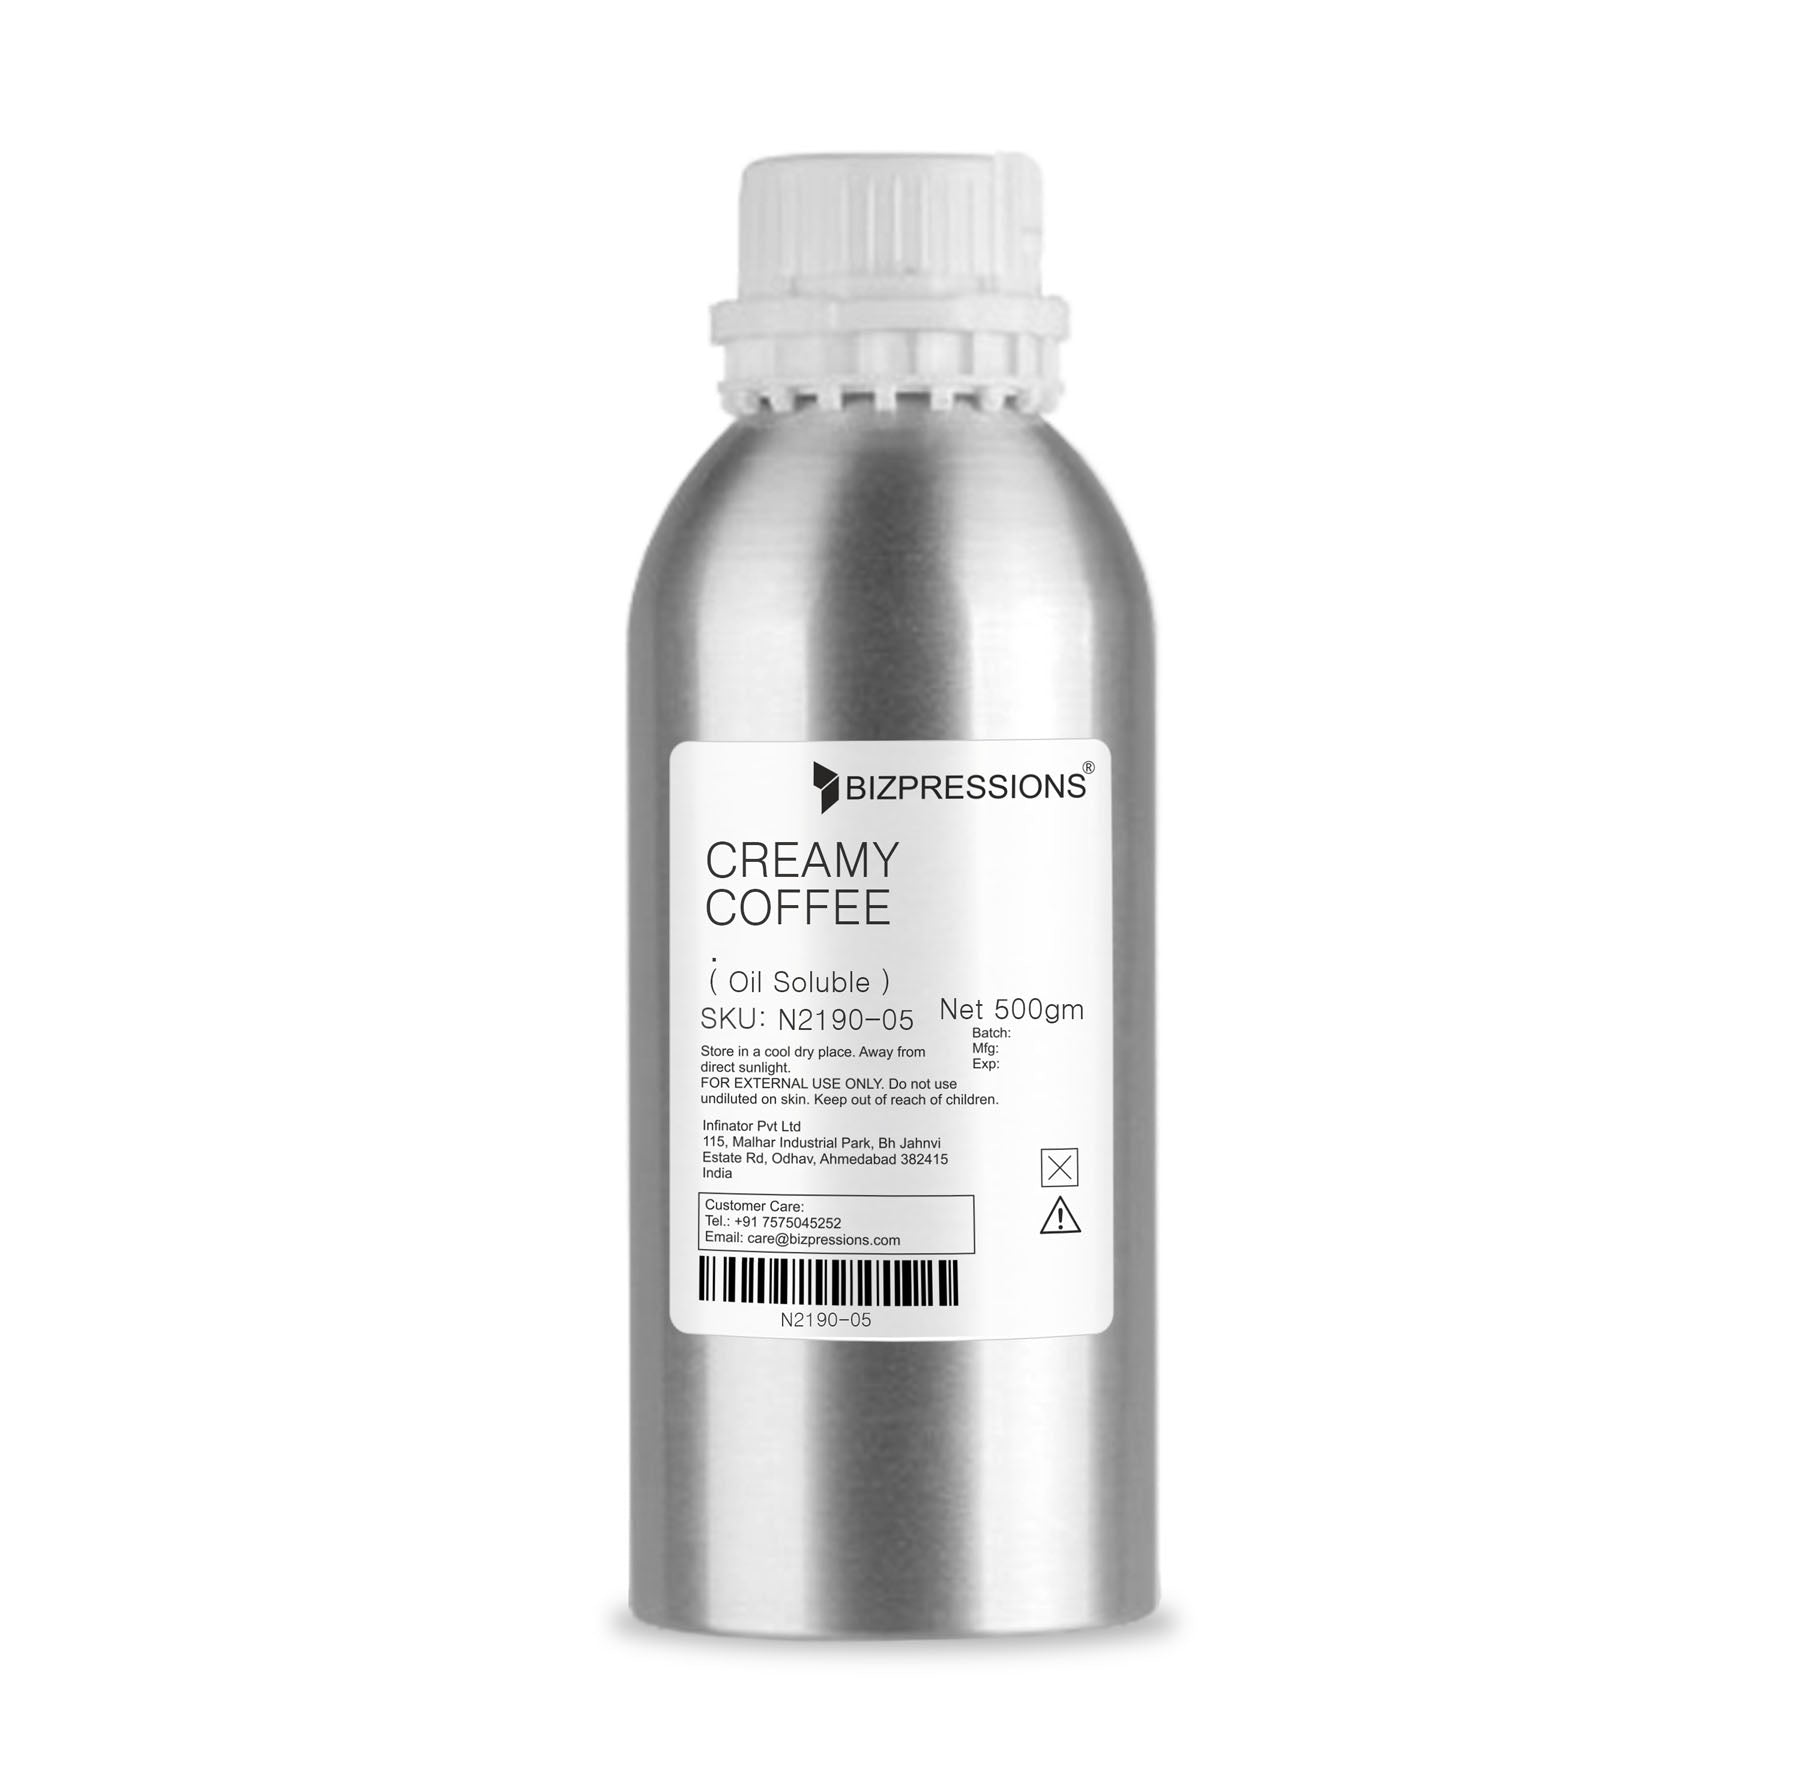 CREAMY COFFEE - Fragrance ( Oil Soluble ) - 500 gm